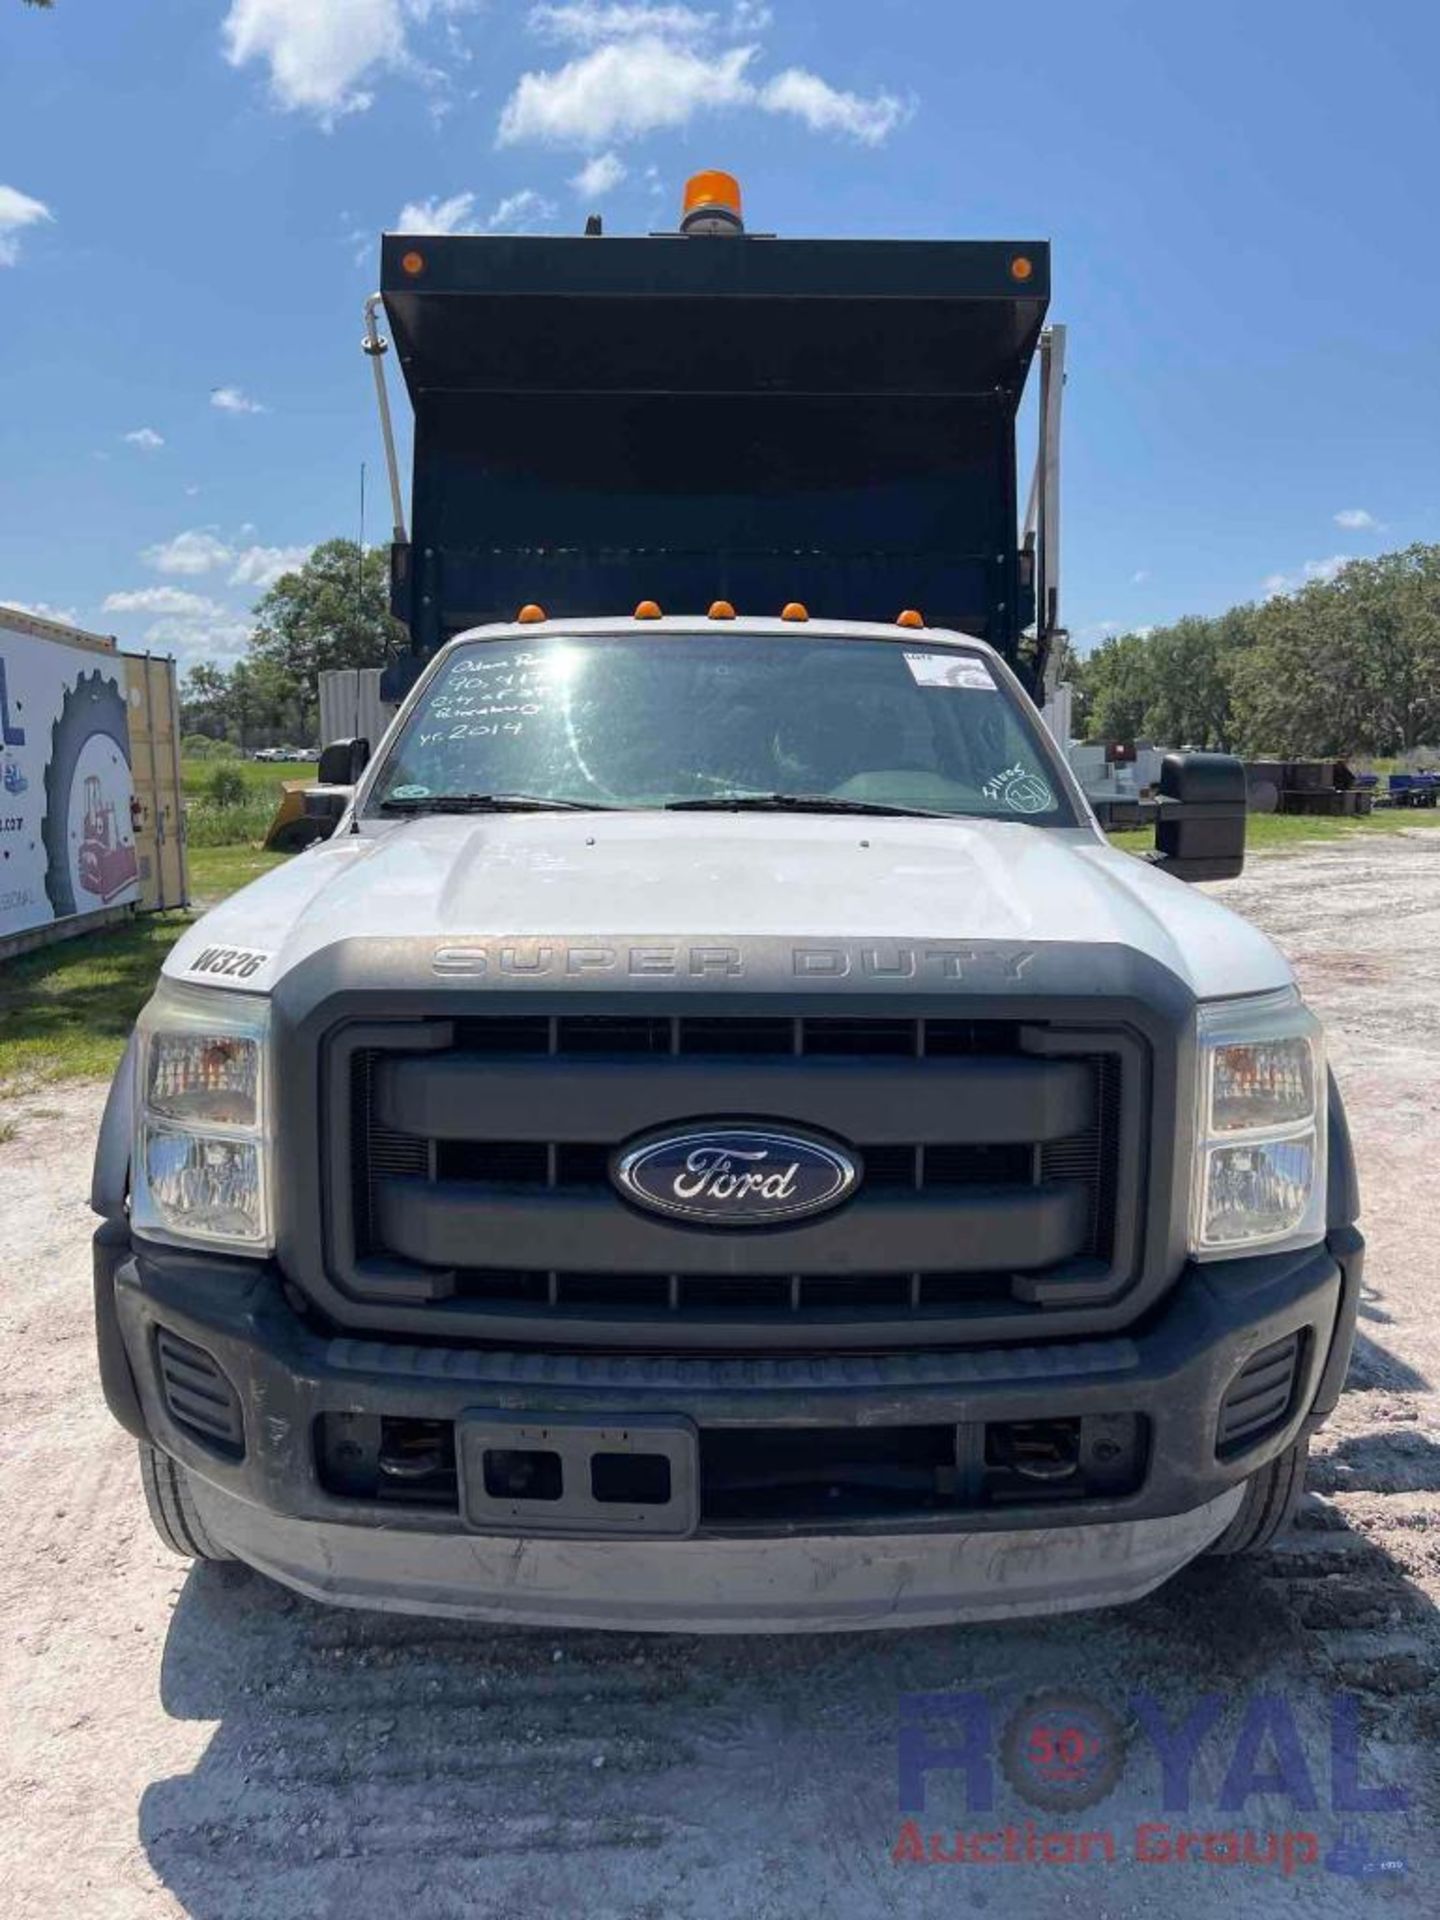 2014 Ford F-550 Mason Dump Truck - Image 33 of 44